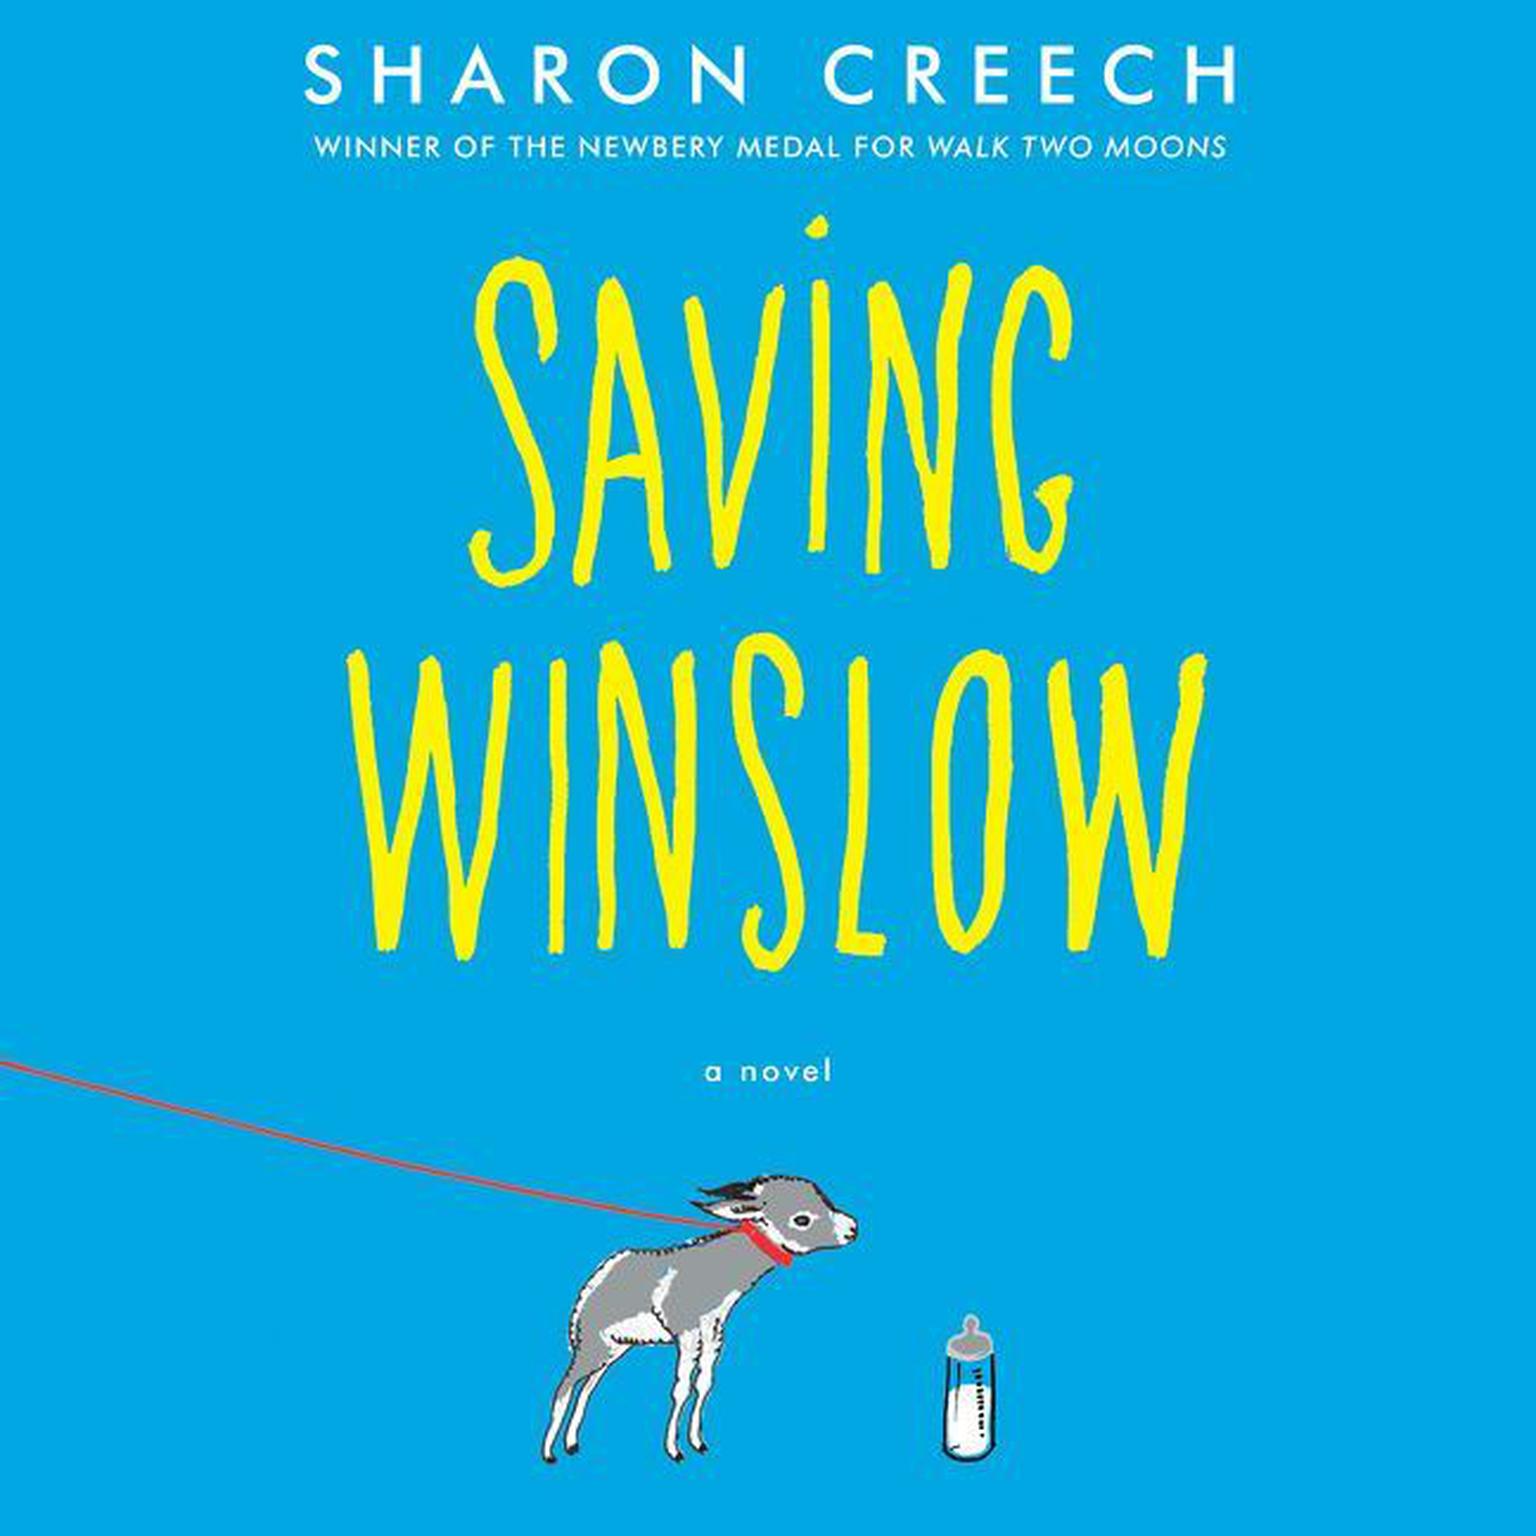 Saving Winslow Audiobook, by Sharon Creech